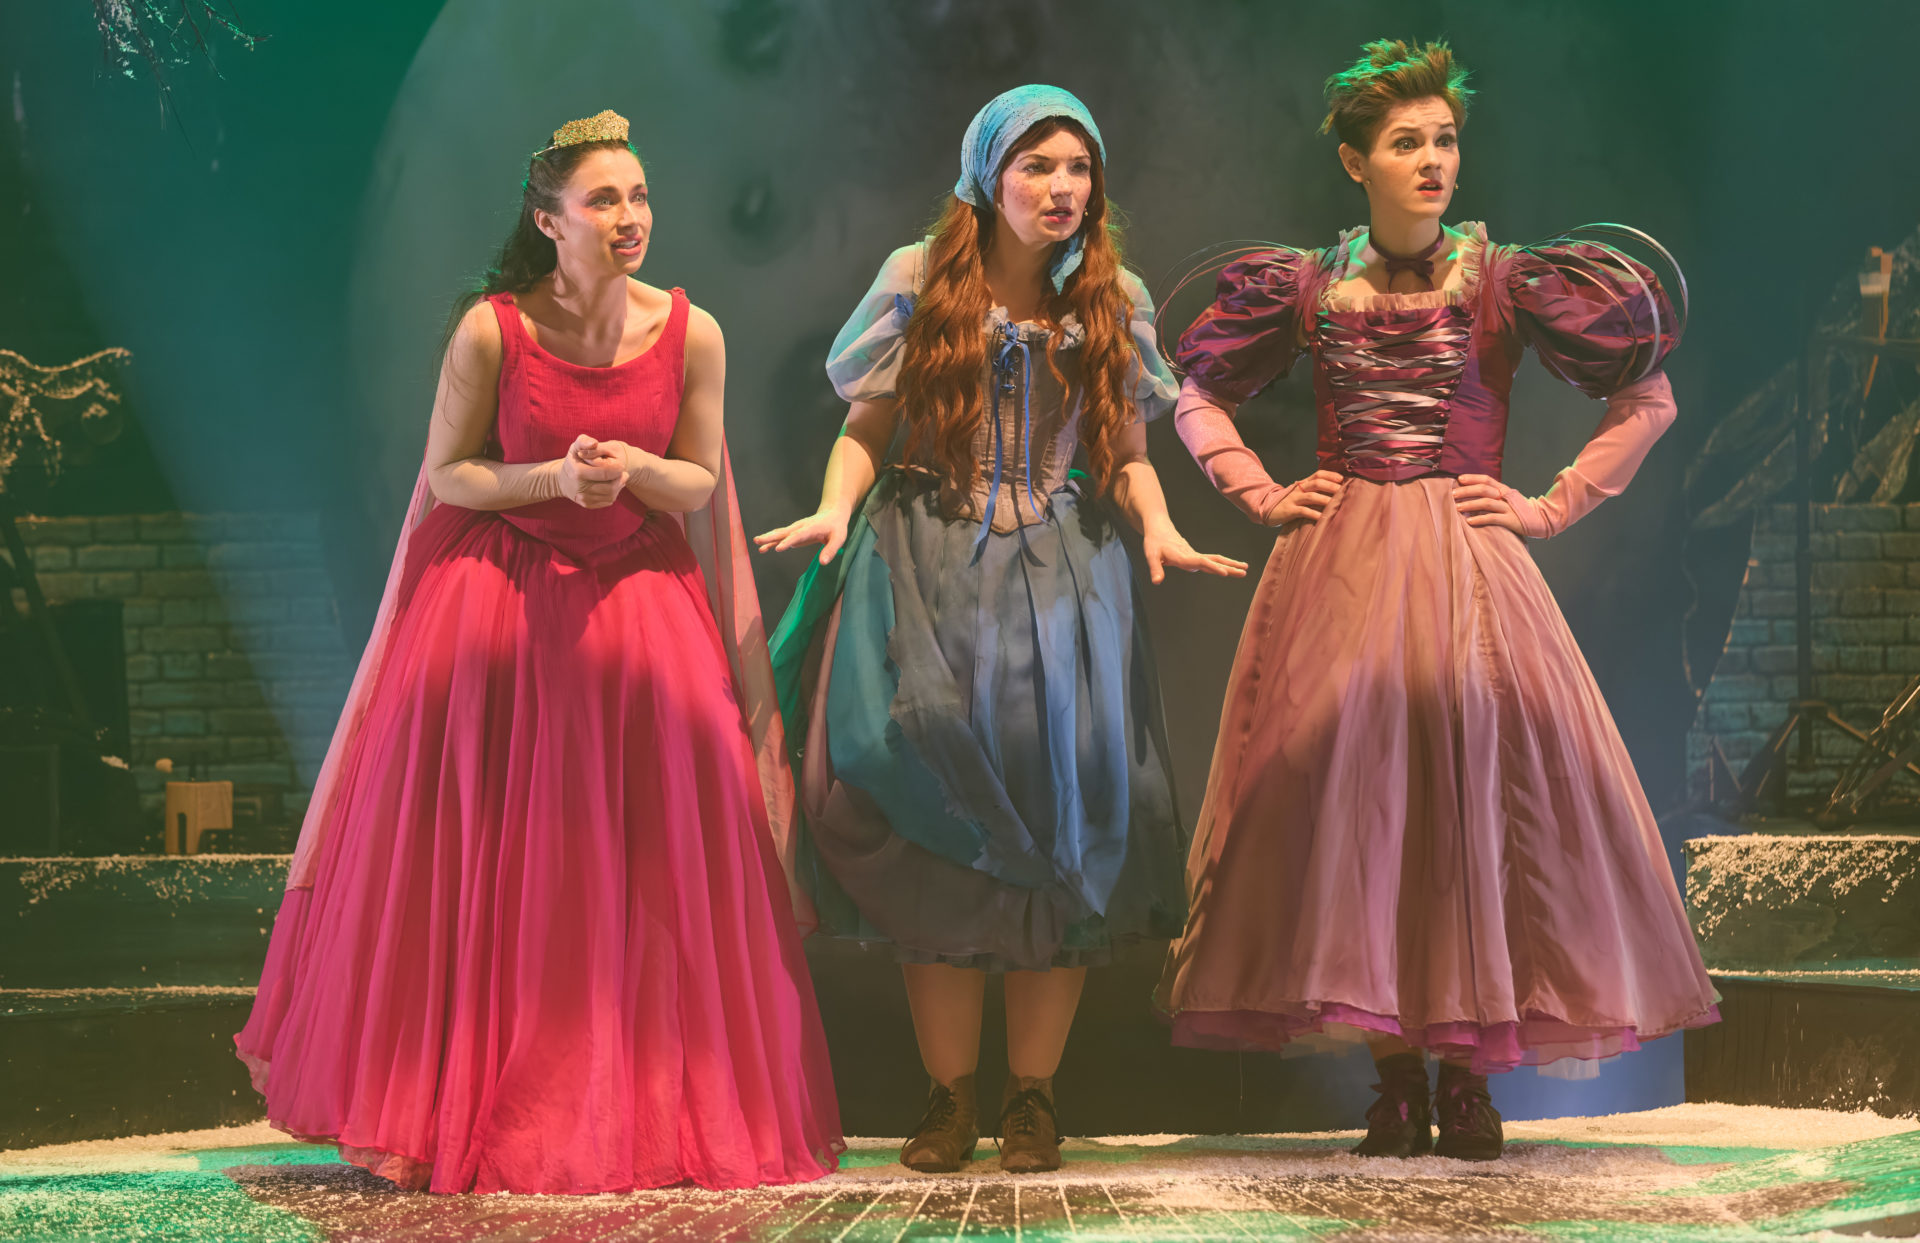 Bethzienna Williams as Sleeping Beauty, Katie Elin-Salt as Cinderella and Sarah Workman as Rapunzel